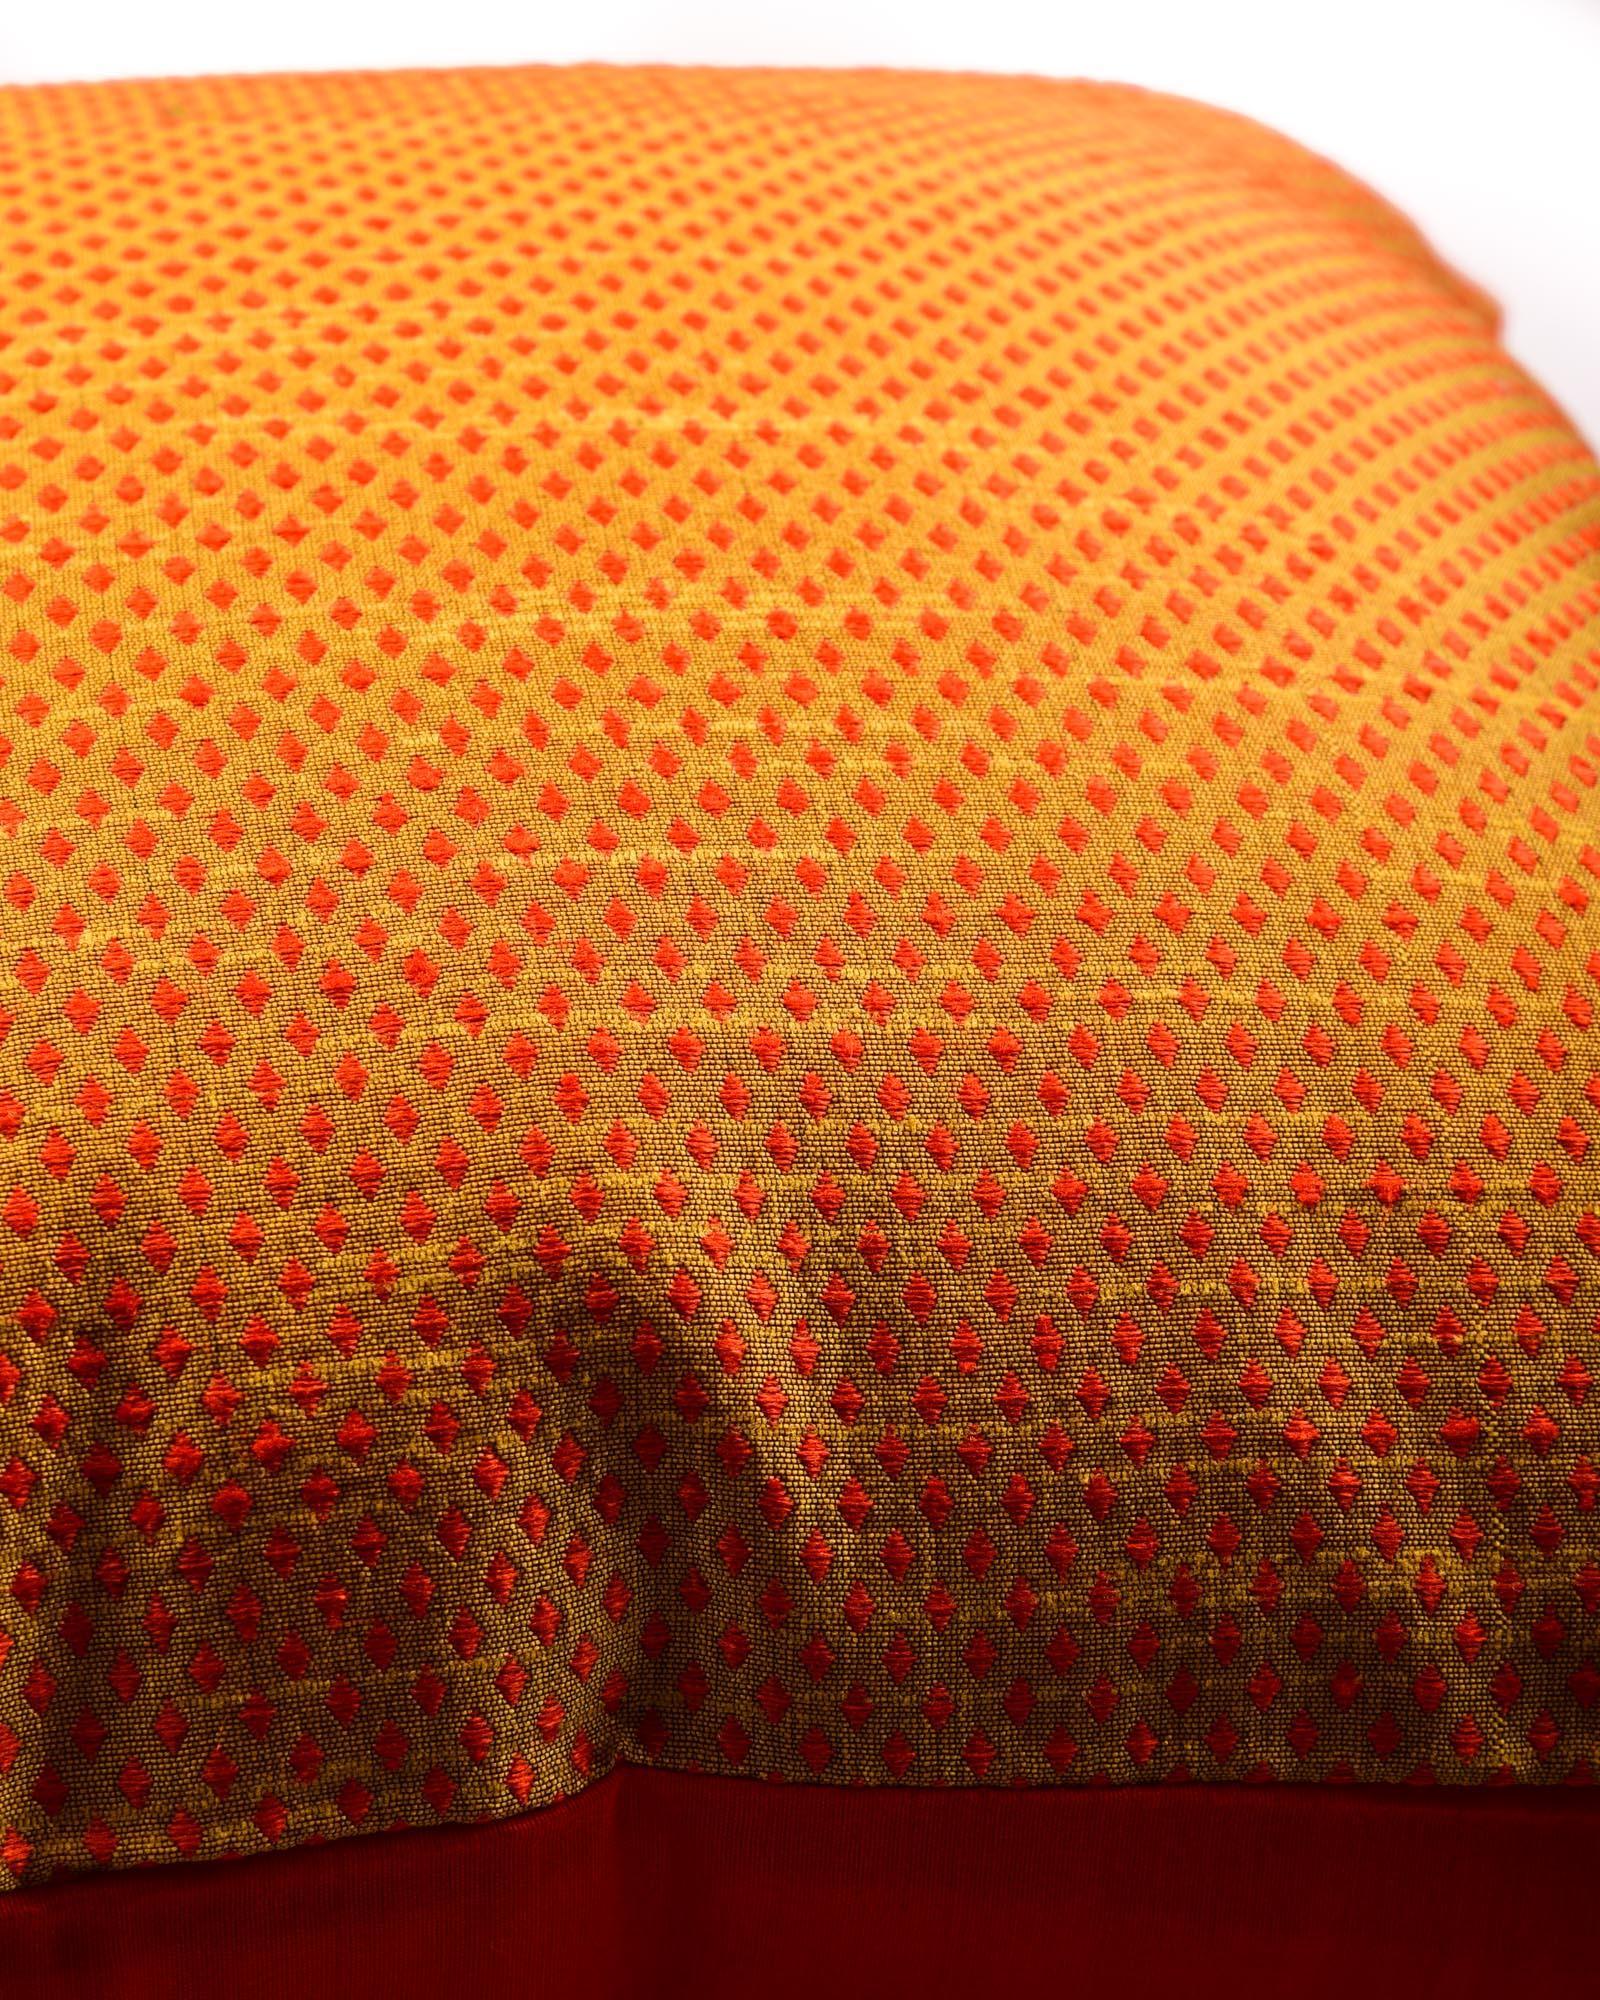 Mustard Yellow Banarasi Jacquard Poly Dupion Cushion Cover 16" - By HolyWeaves, Benares